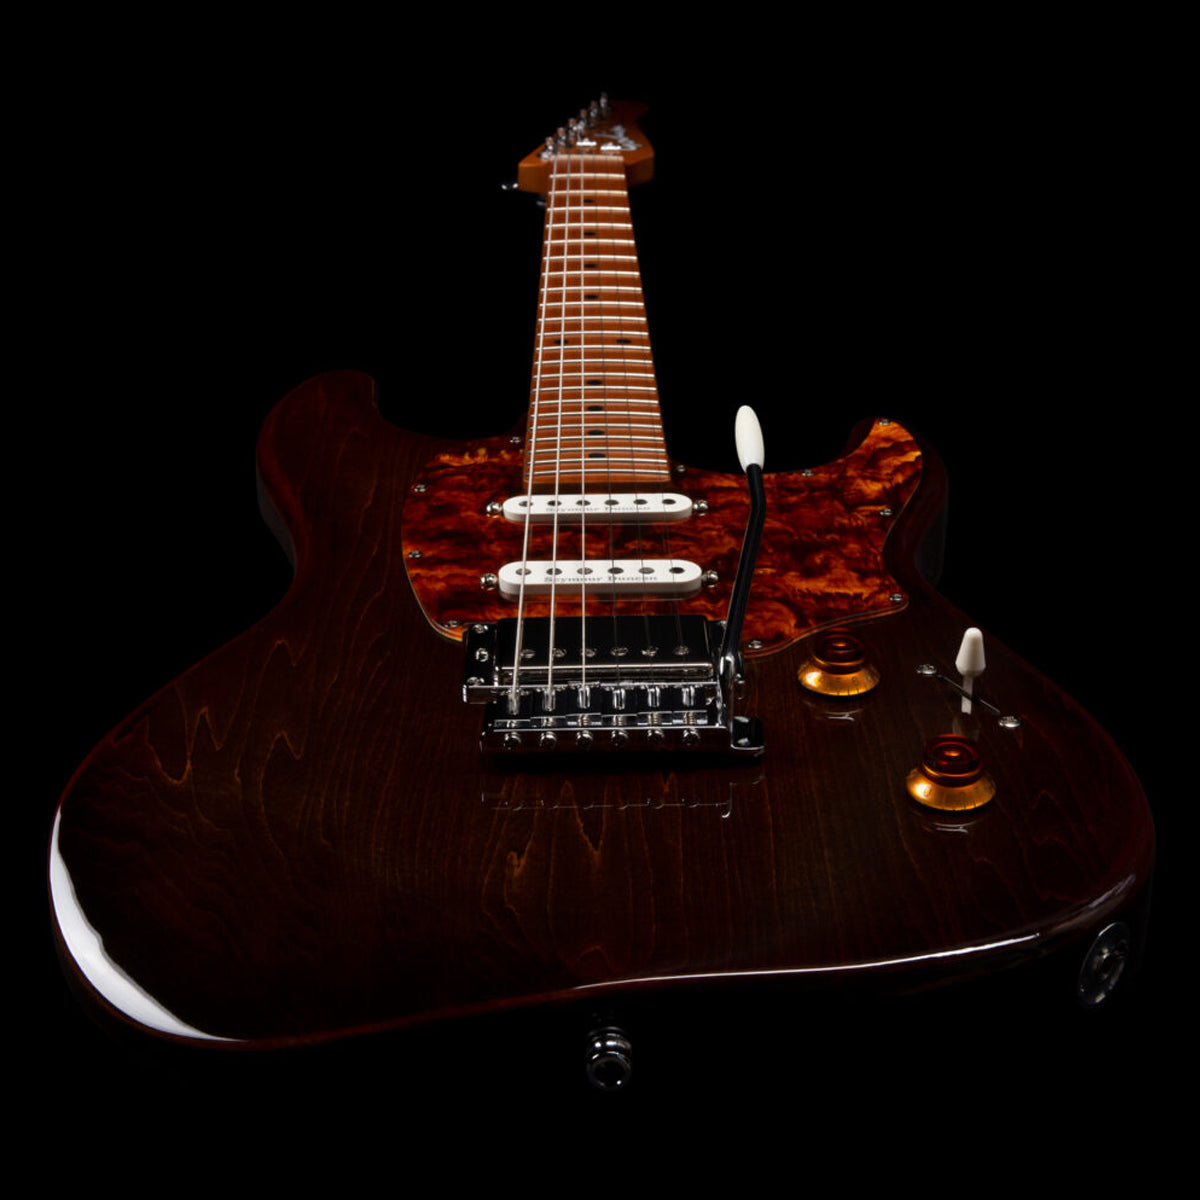 Godin Session T-Pro LTD Electric Guitar ~ Kanton Burst MN, Electric Guitar for sale at Richards Guitars.